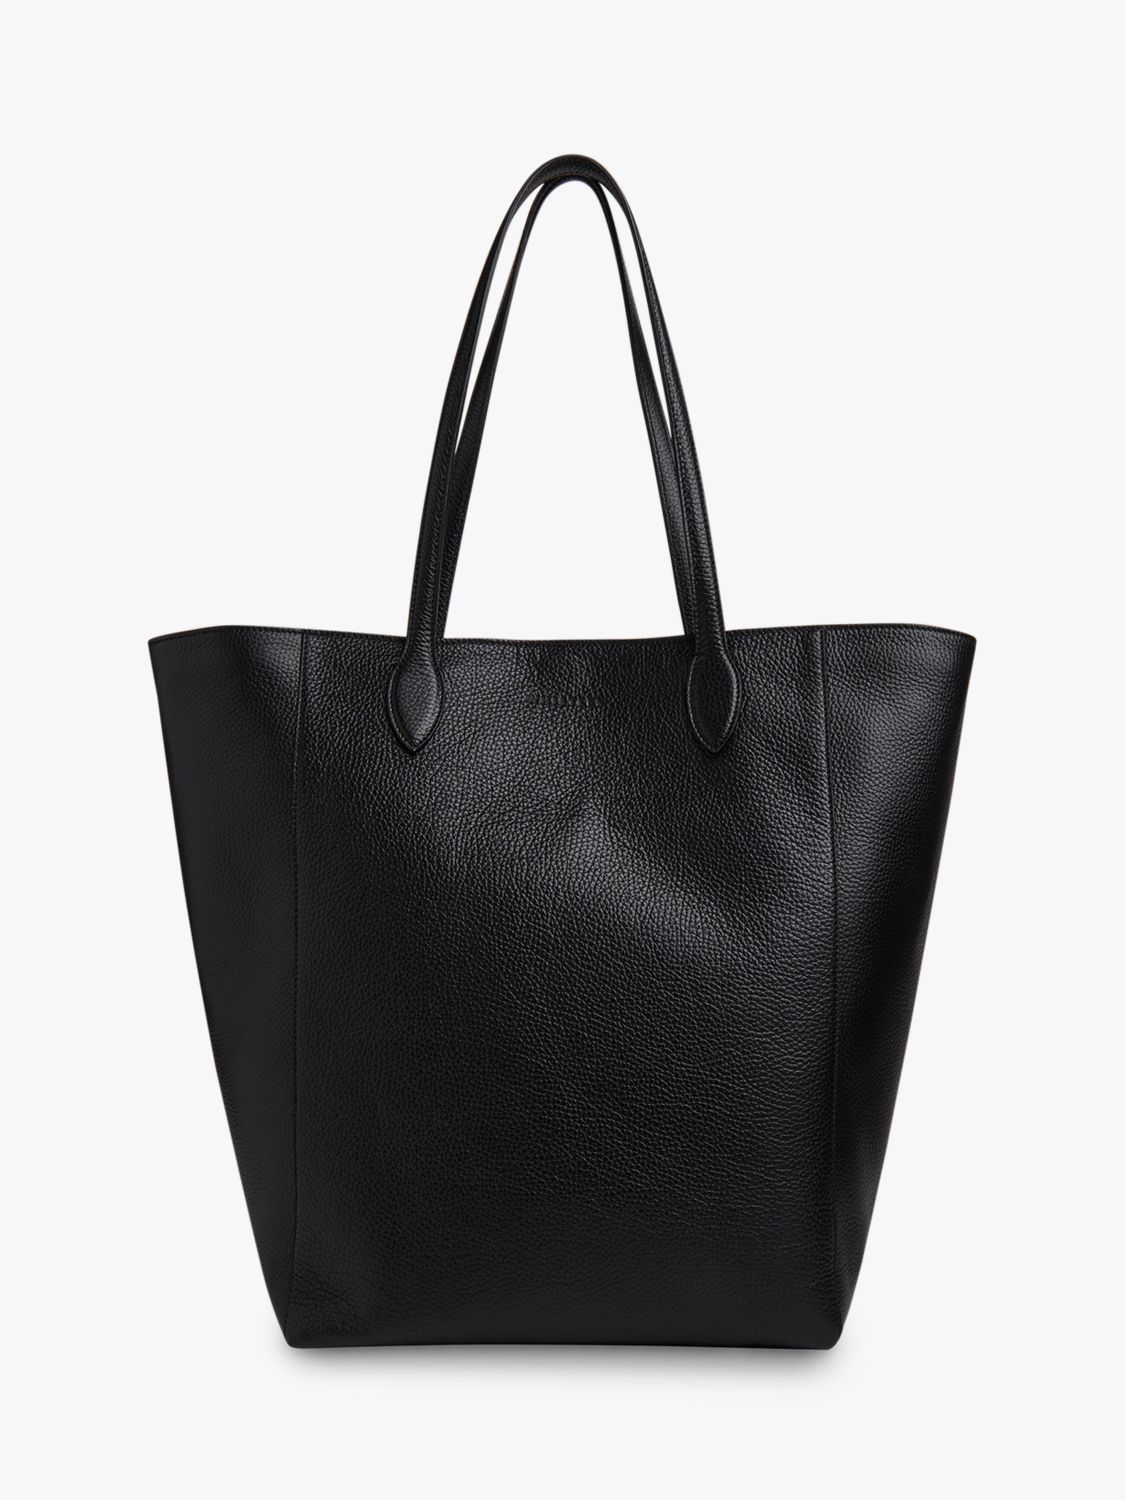 Buy Whistles Amara Leather Tote Bag Online at johnlewis.com